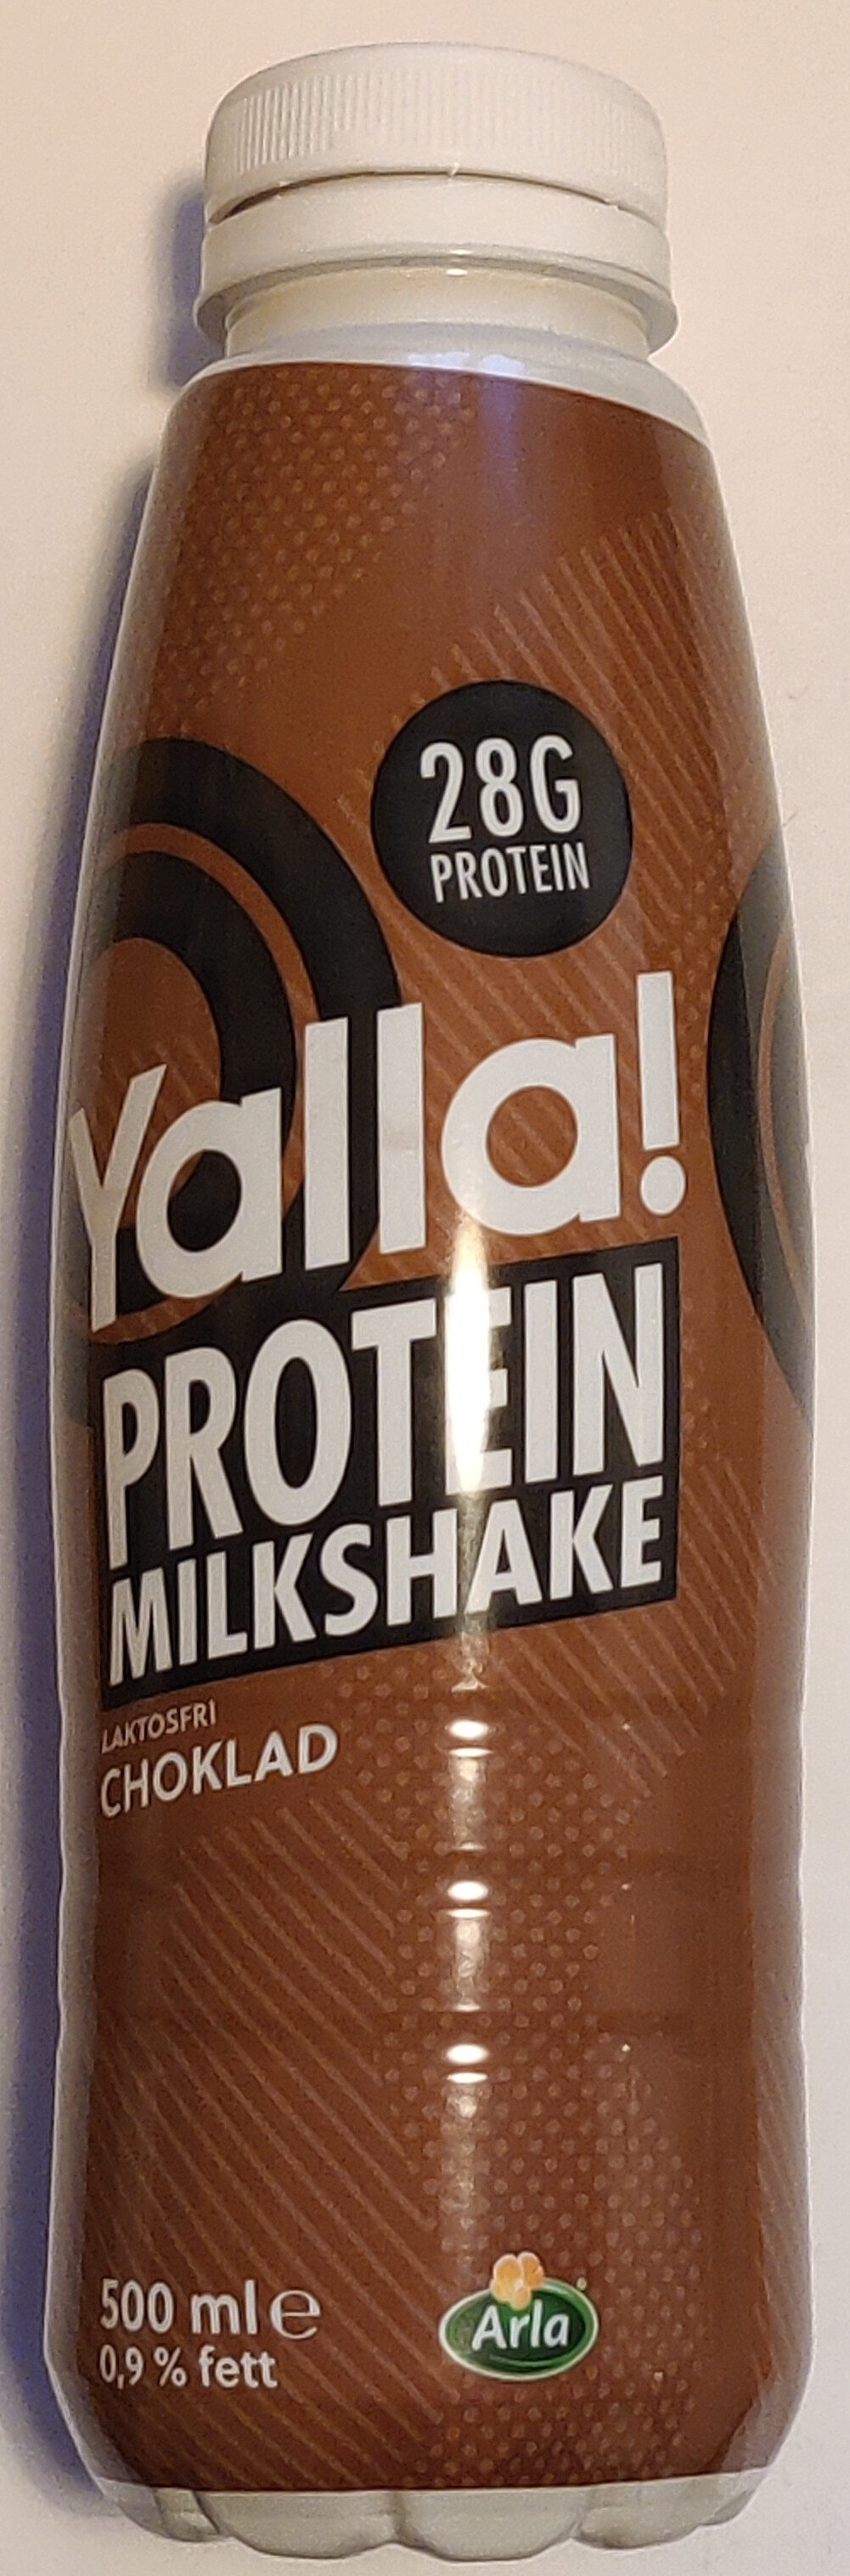 Yalla! Protein Milkshake Choklad - Produkt